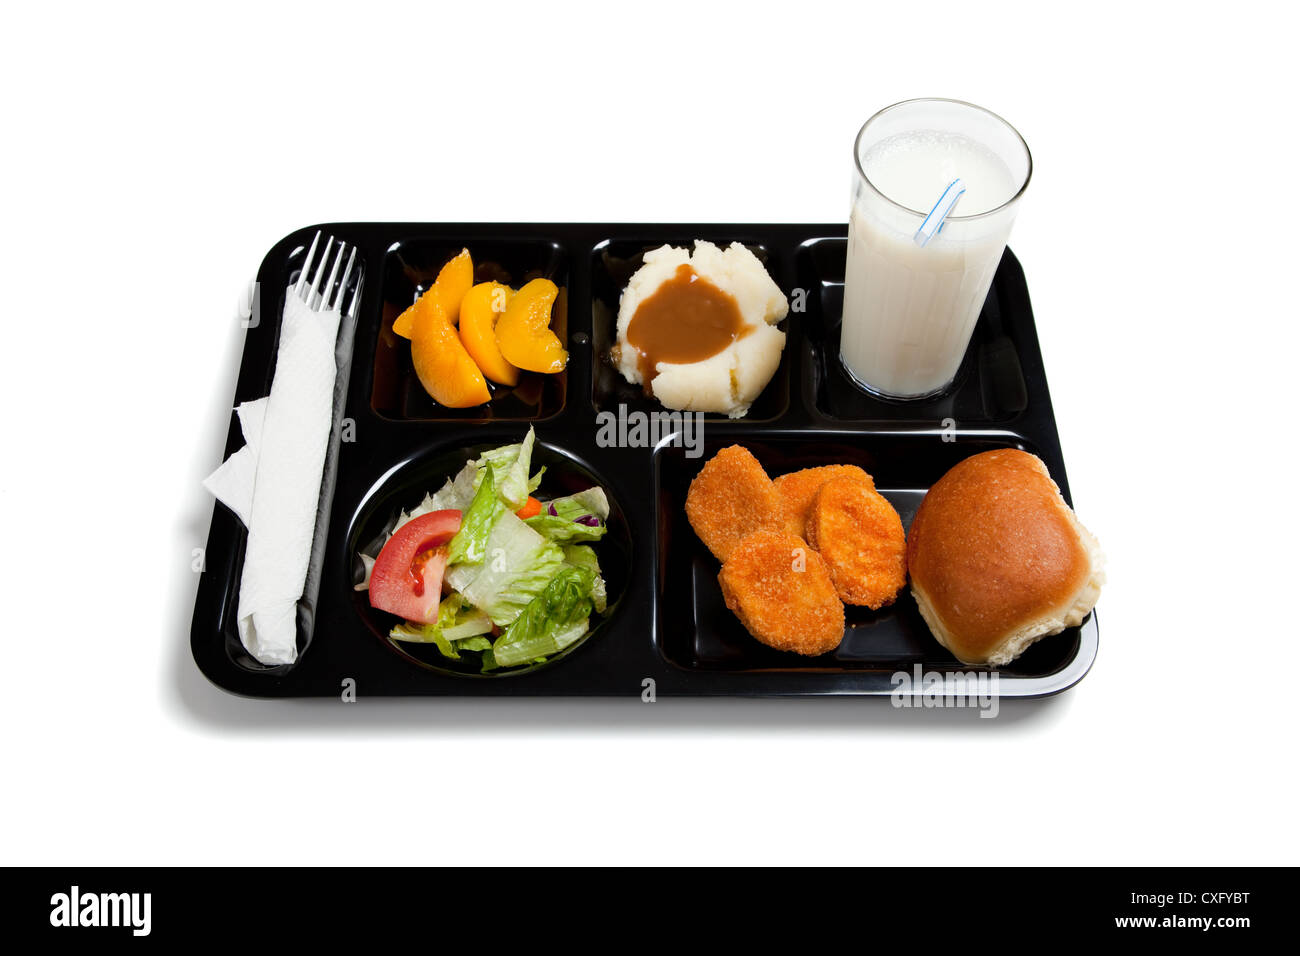 School lunch tray Stock Photo